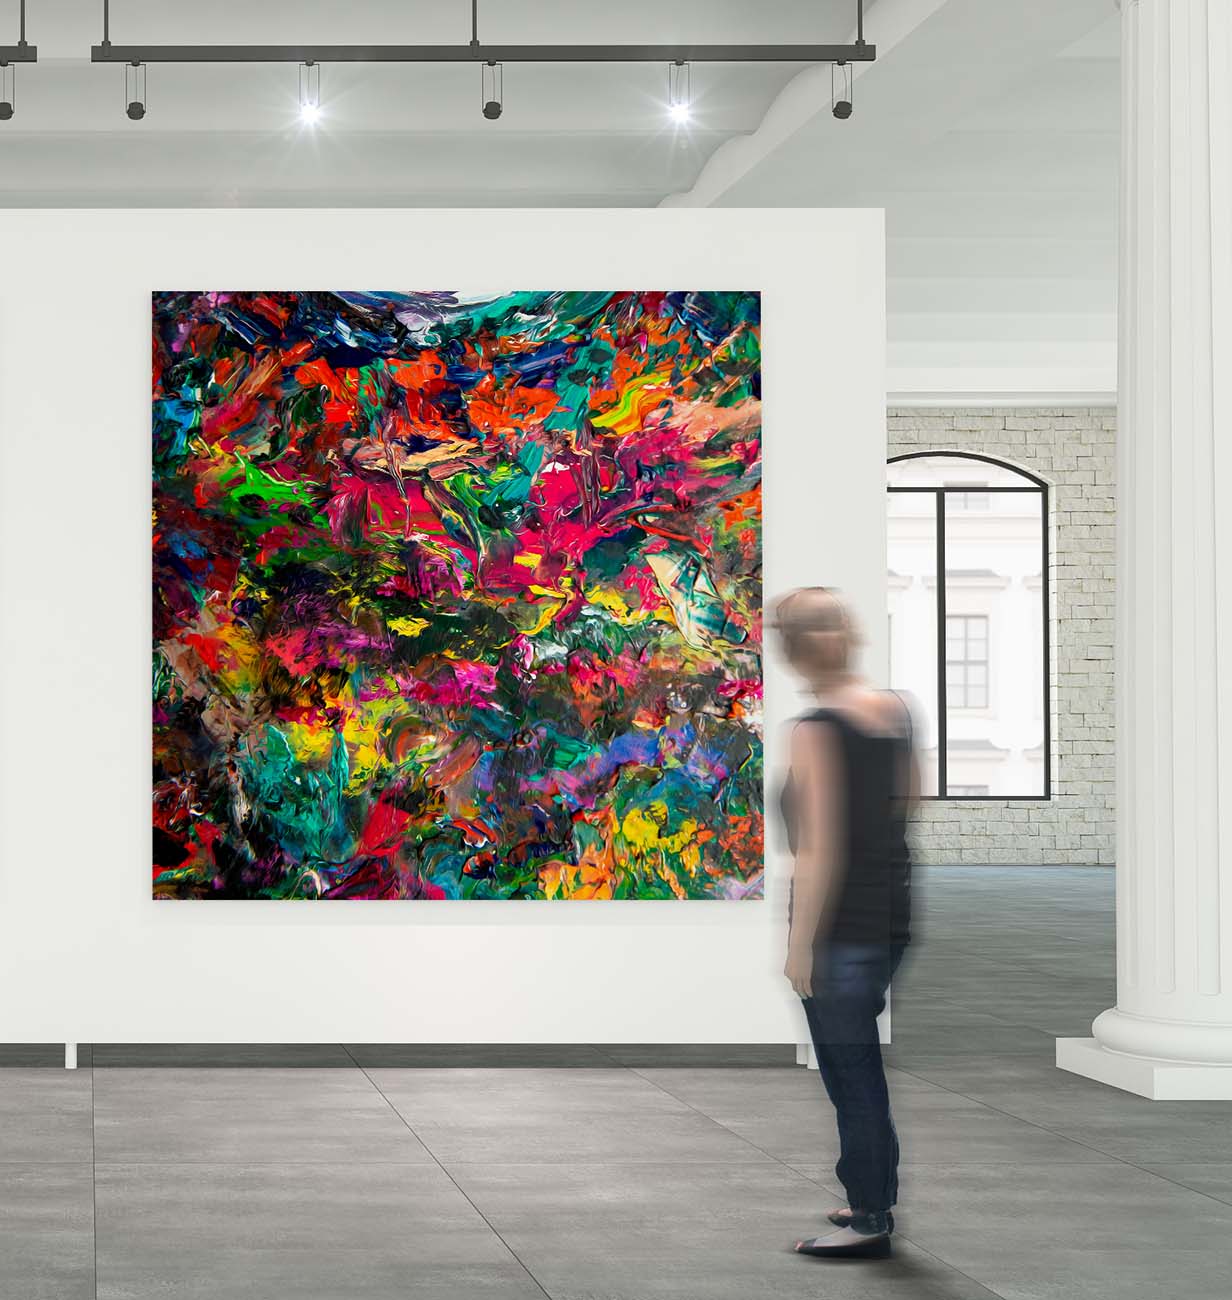 Vid19 Molten Rainbow abstract art by Doug LaRue in an art gallery